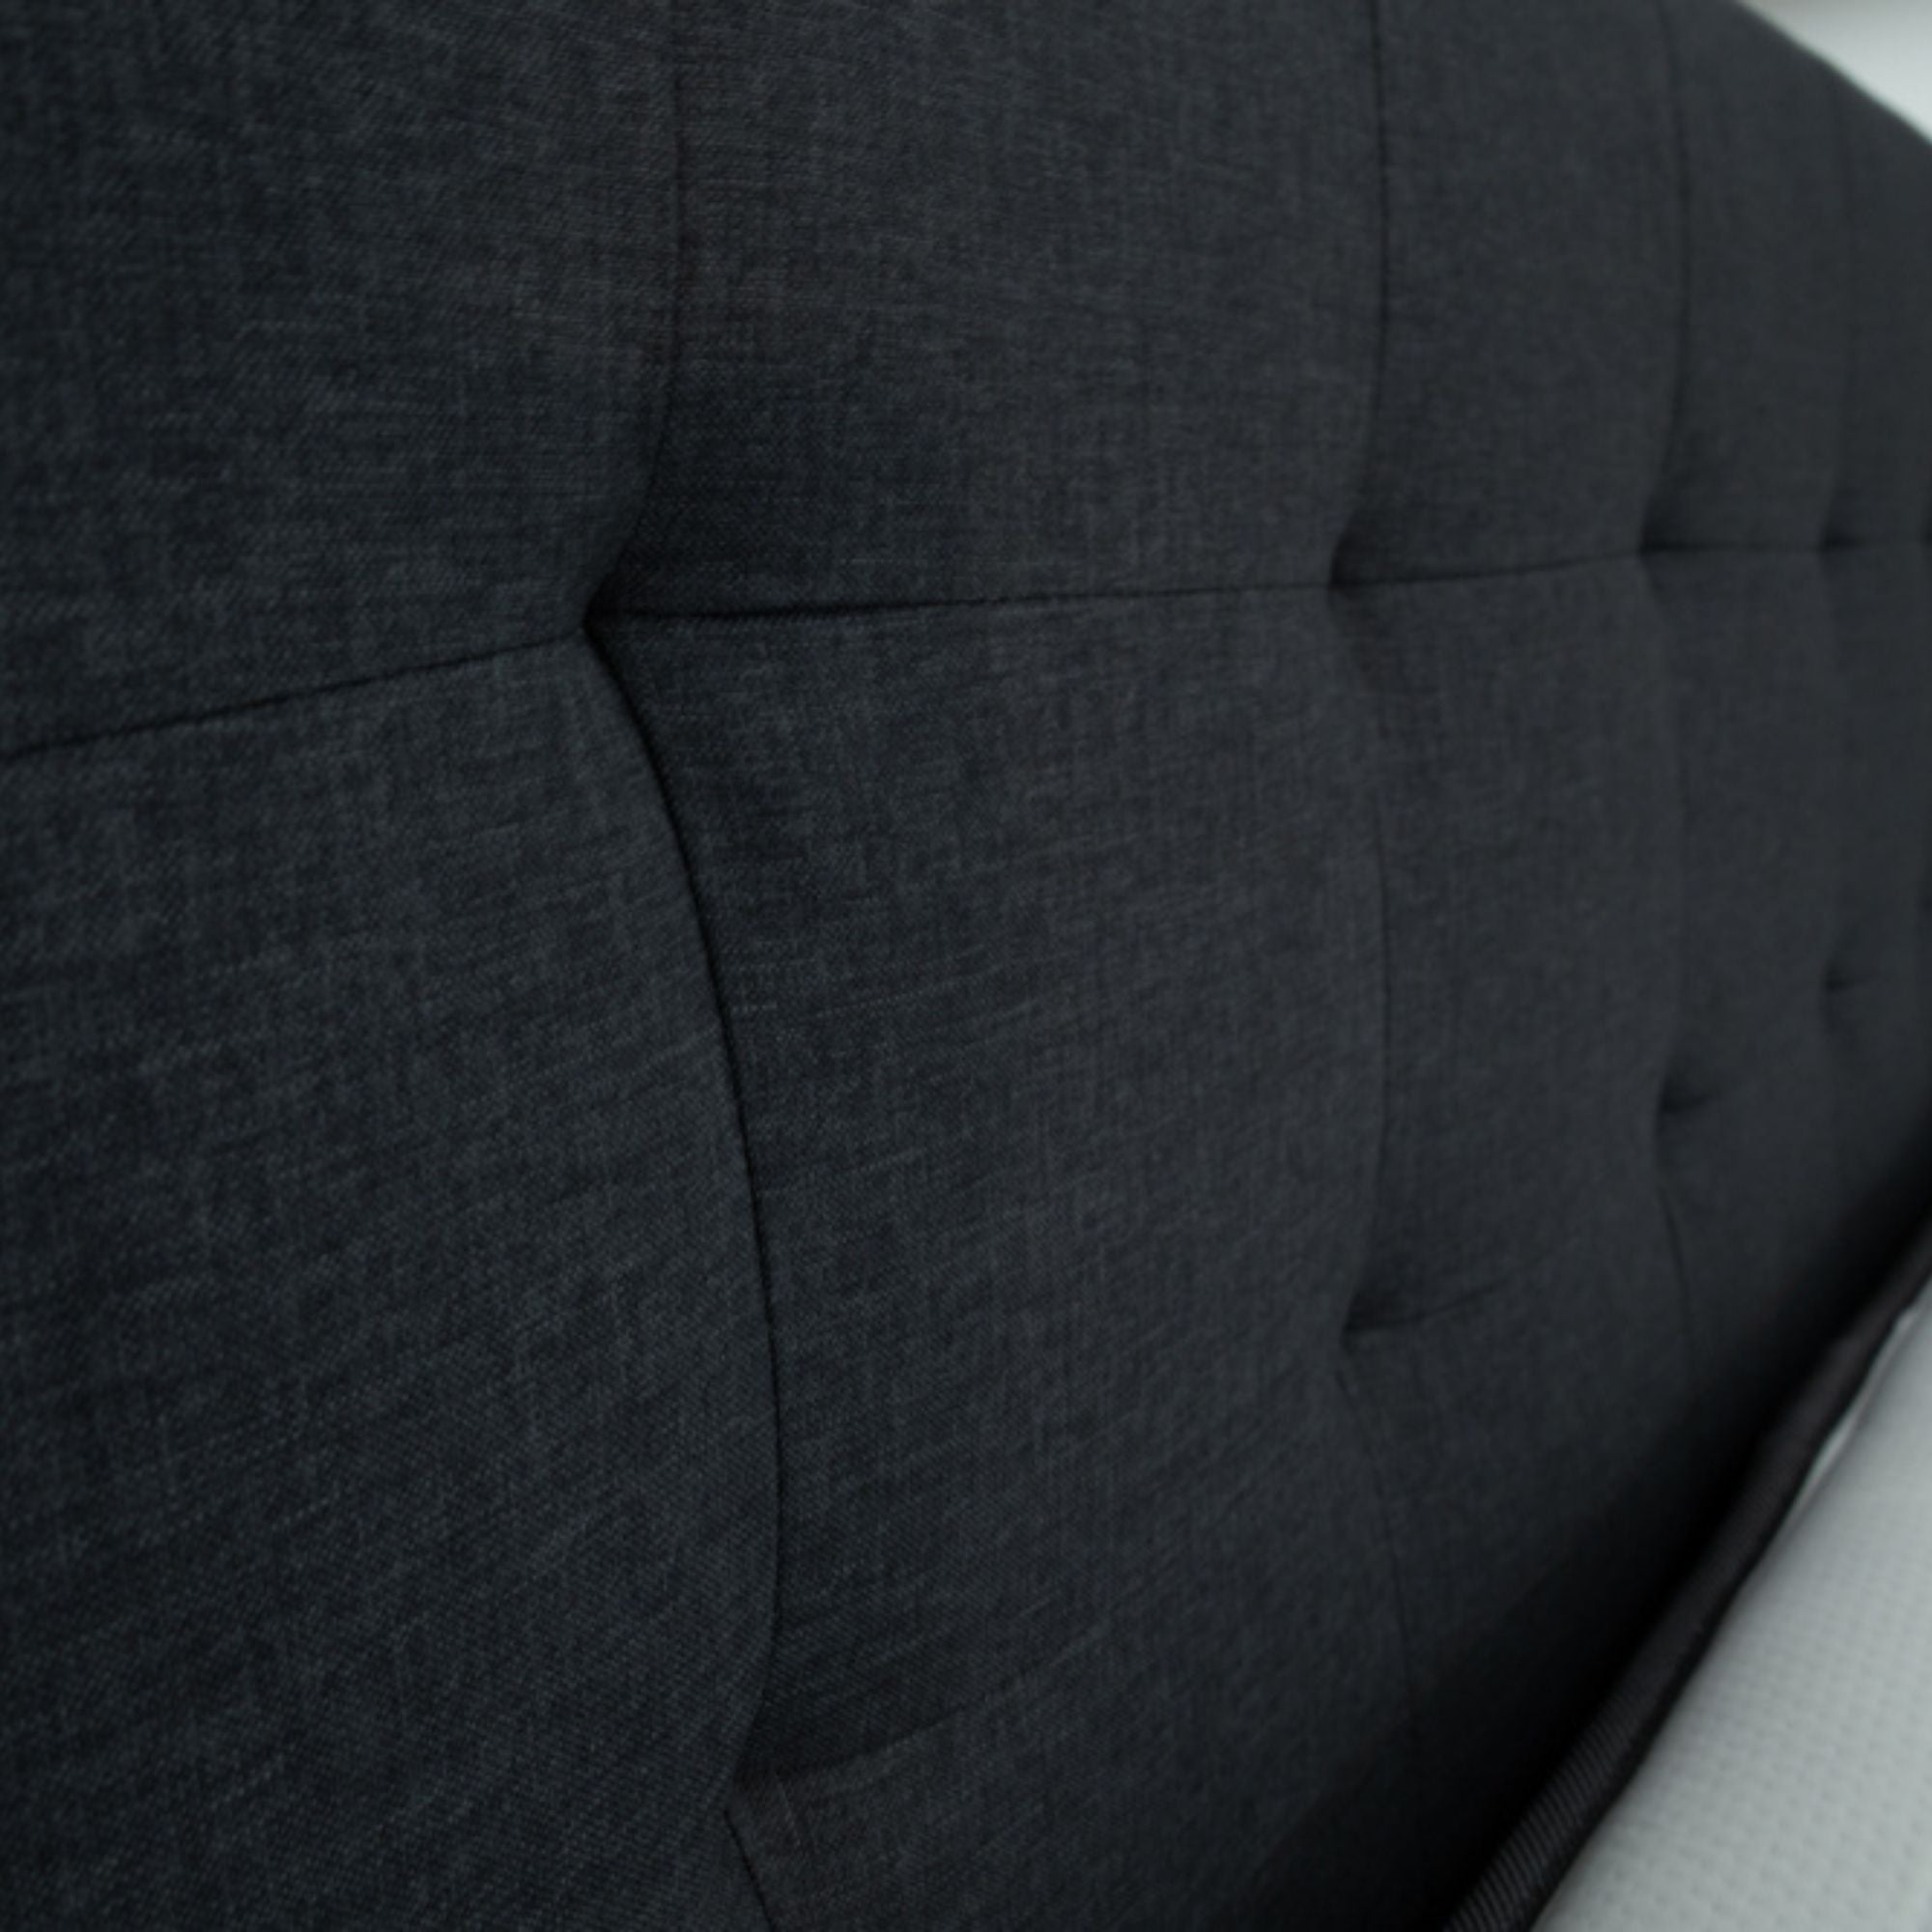 Volga King Single Bed Platform Frame Fabric Upholstered Mattress Base - Charcoal - SILBERSHELL